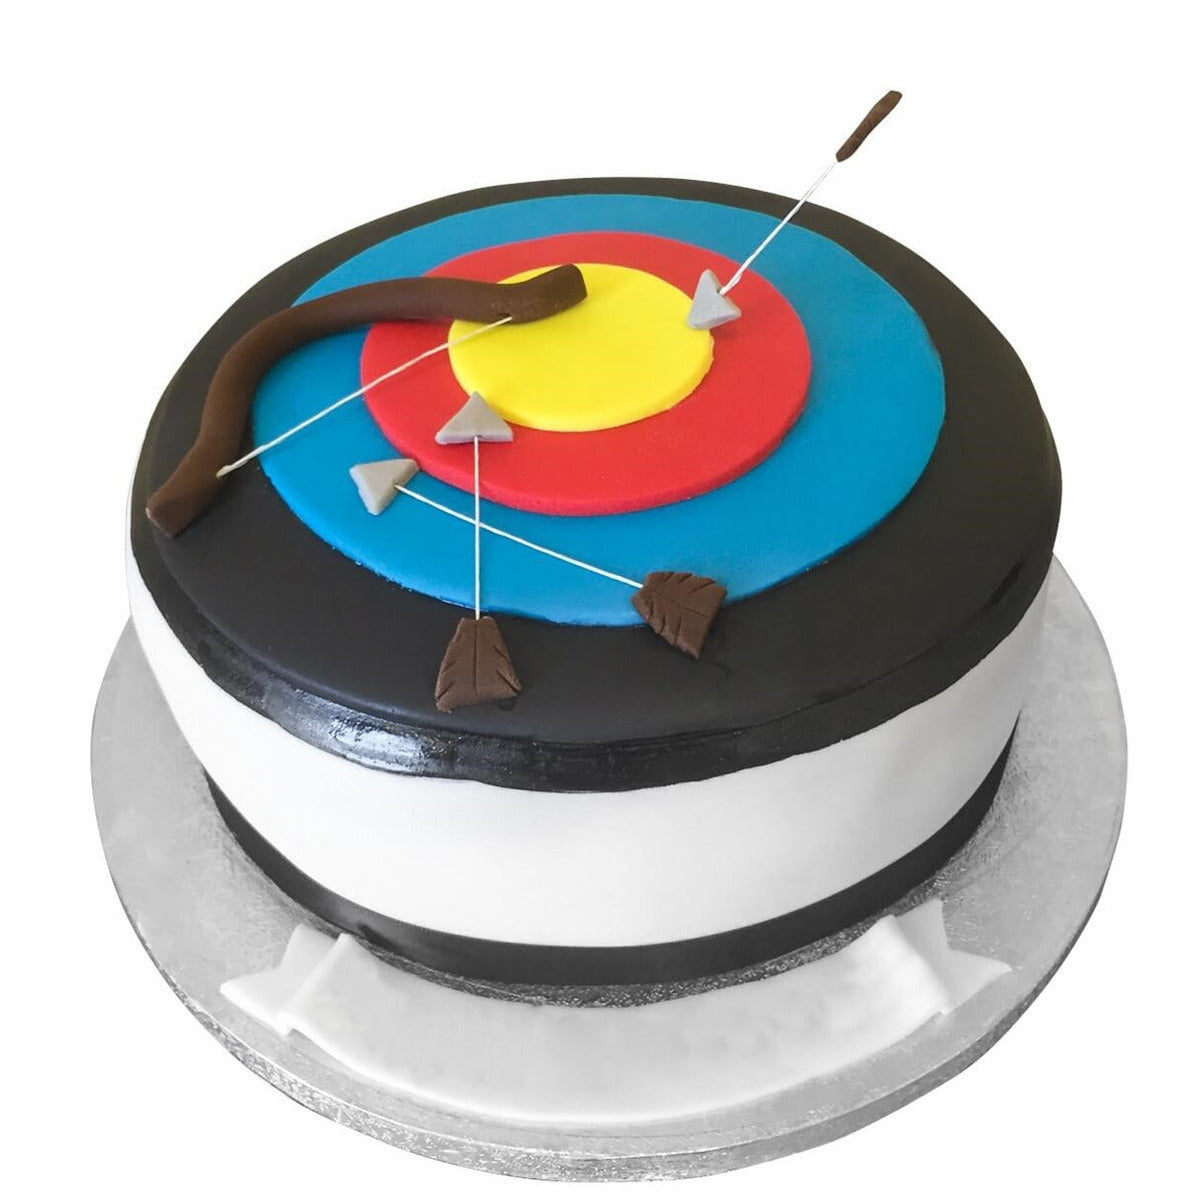 J's Cakes: Archery Target and Arrows Birthday Cake